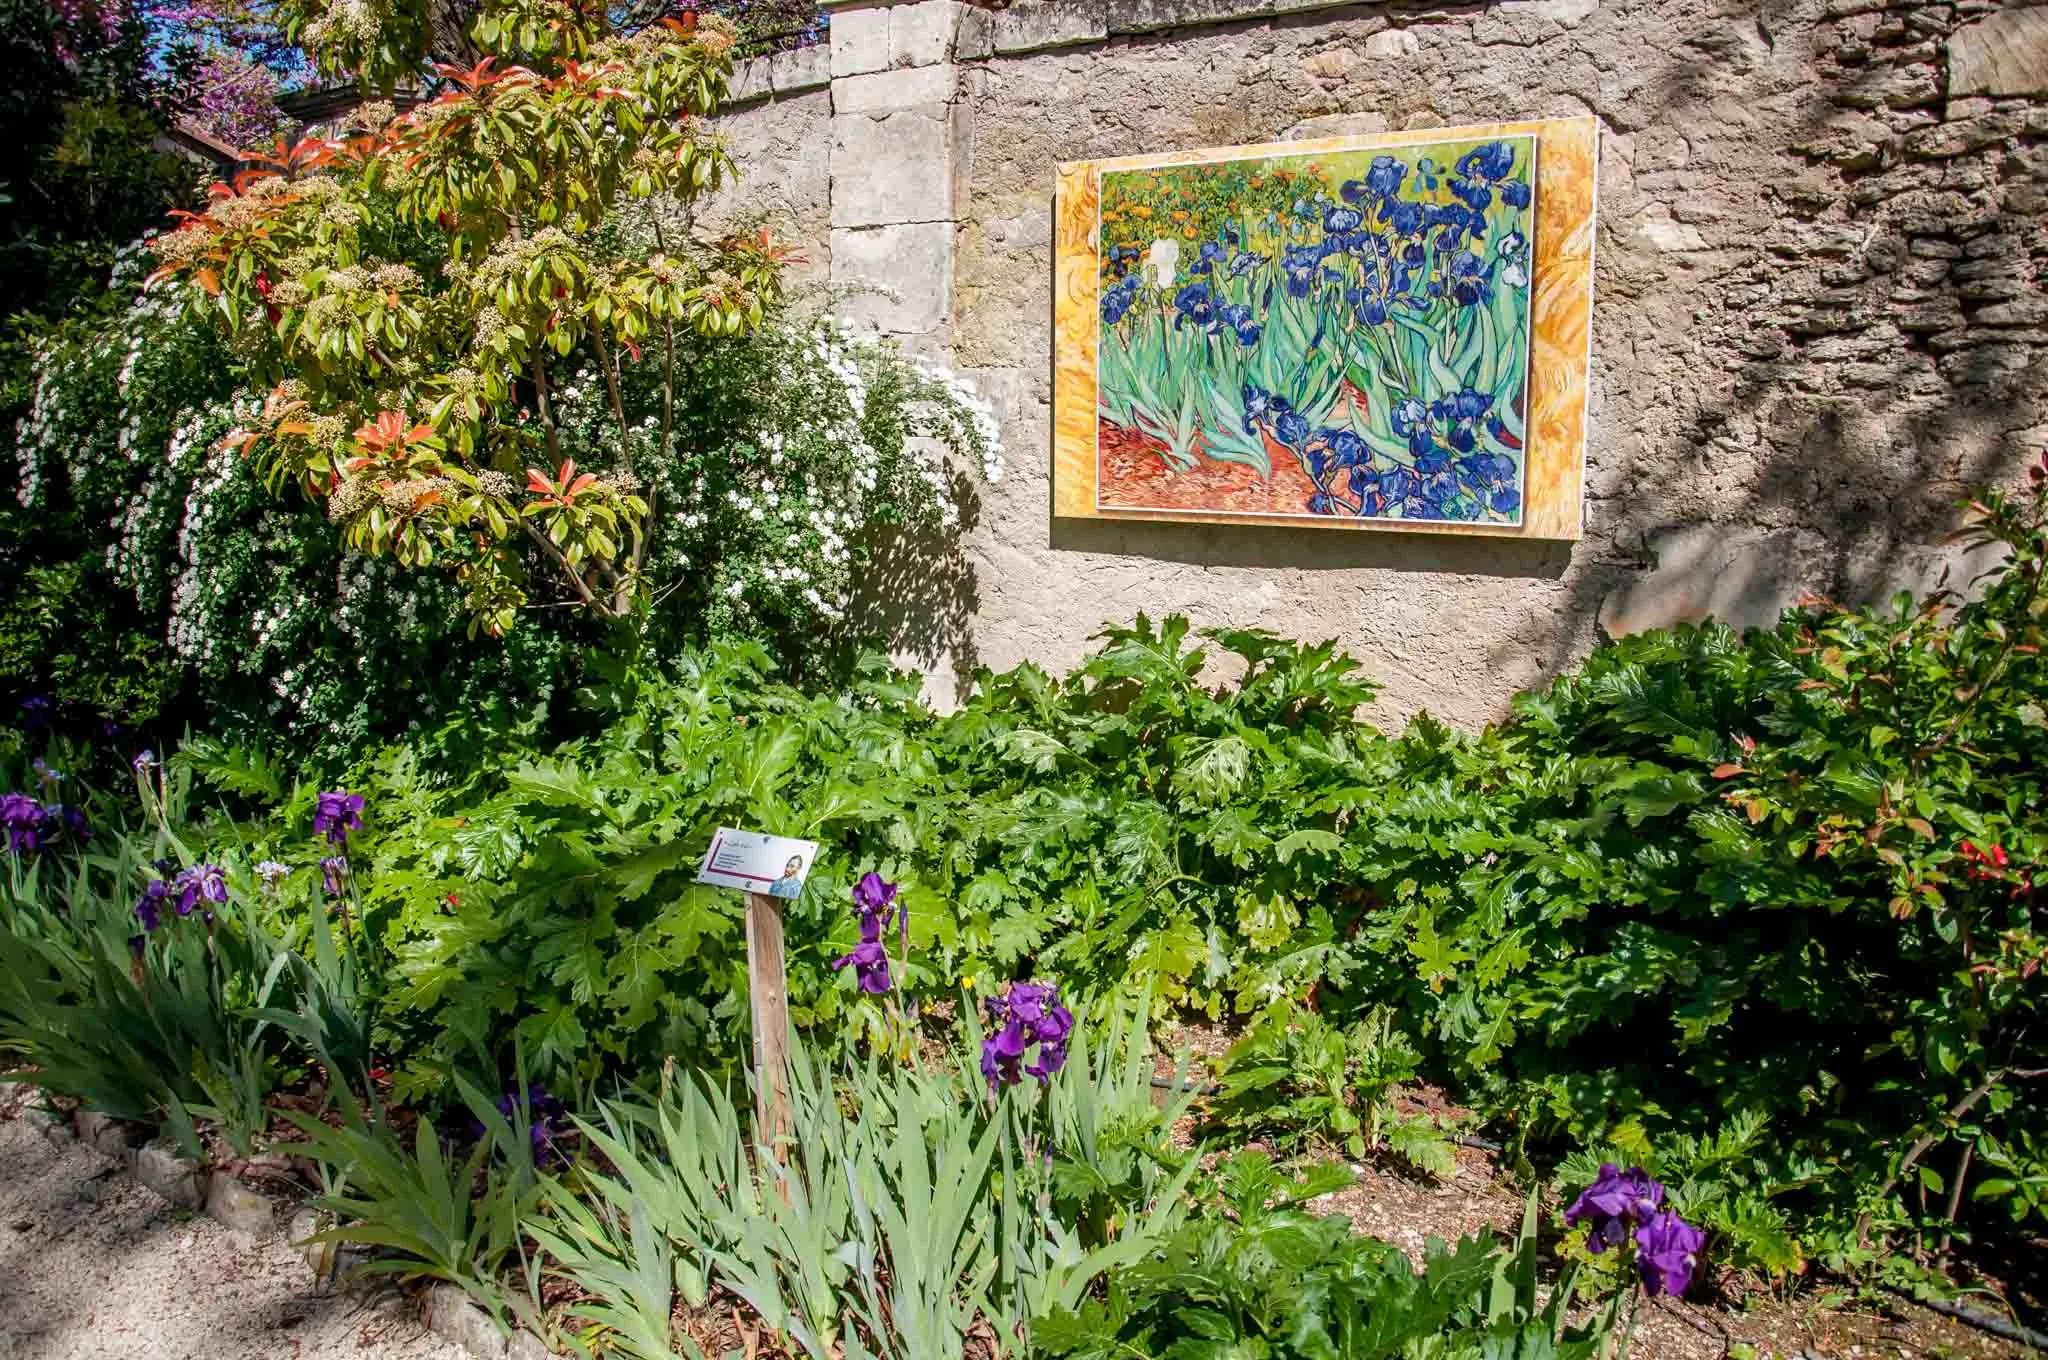 Replicas of Van Gogh's painting of flowers set among flowers